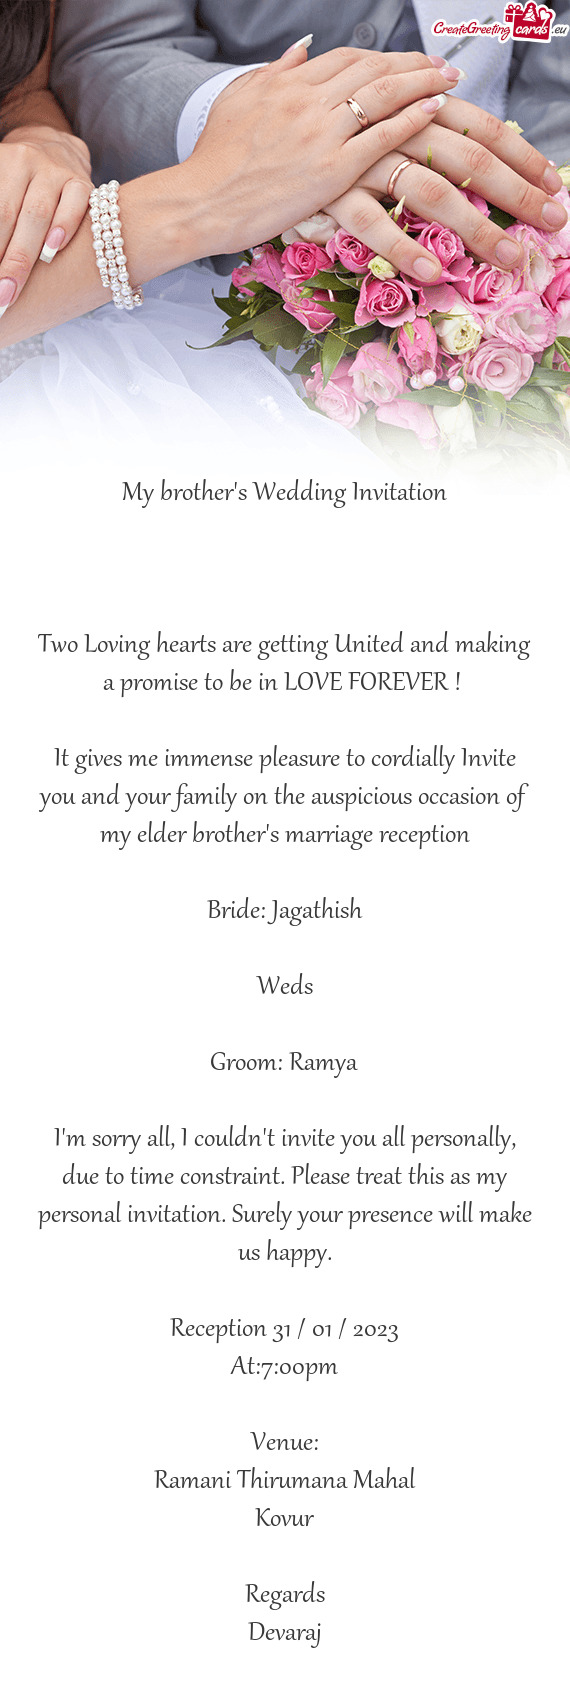 Bride: Jagathish